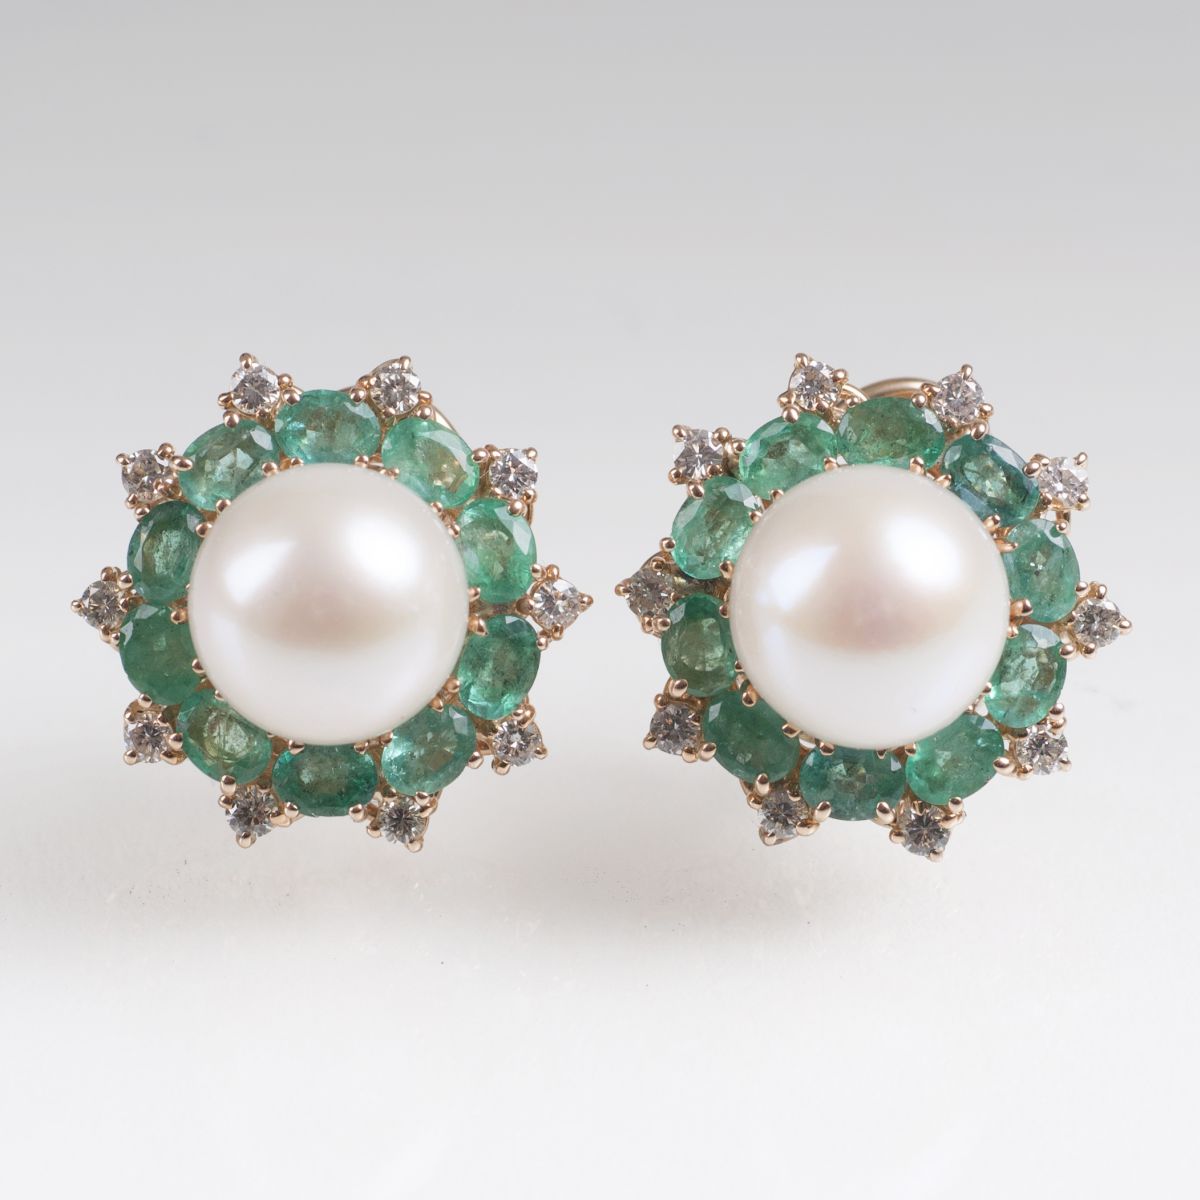 A pair of classical elegant emerald pearl earrings